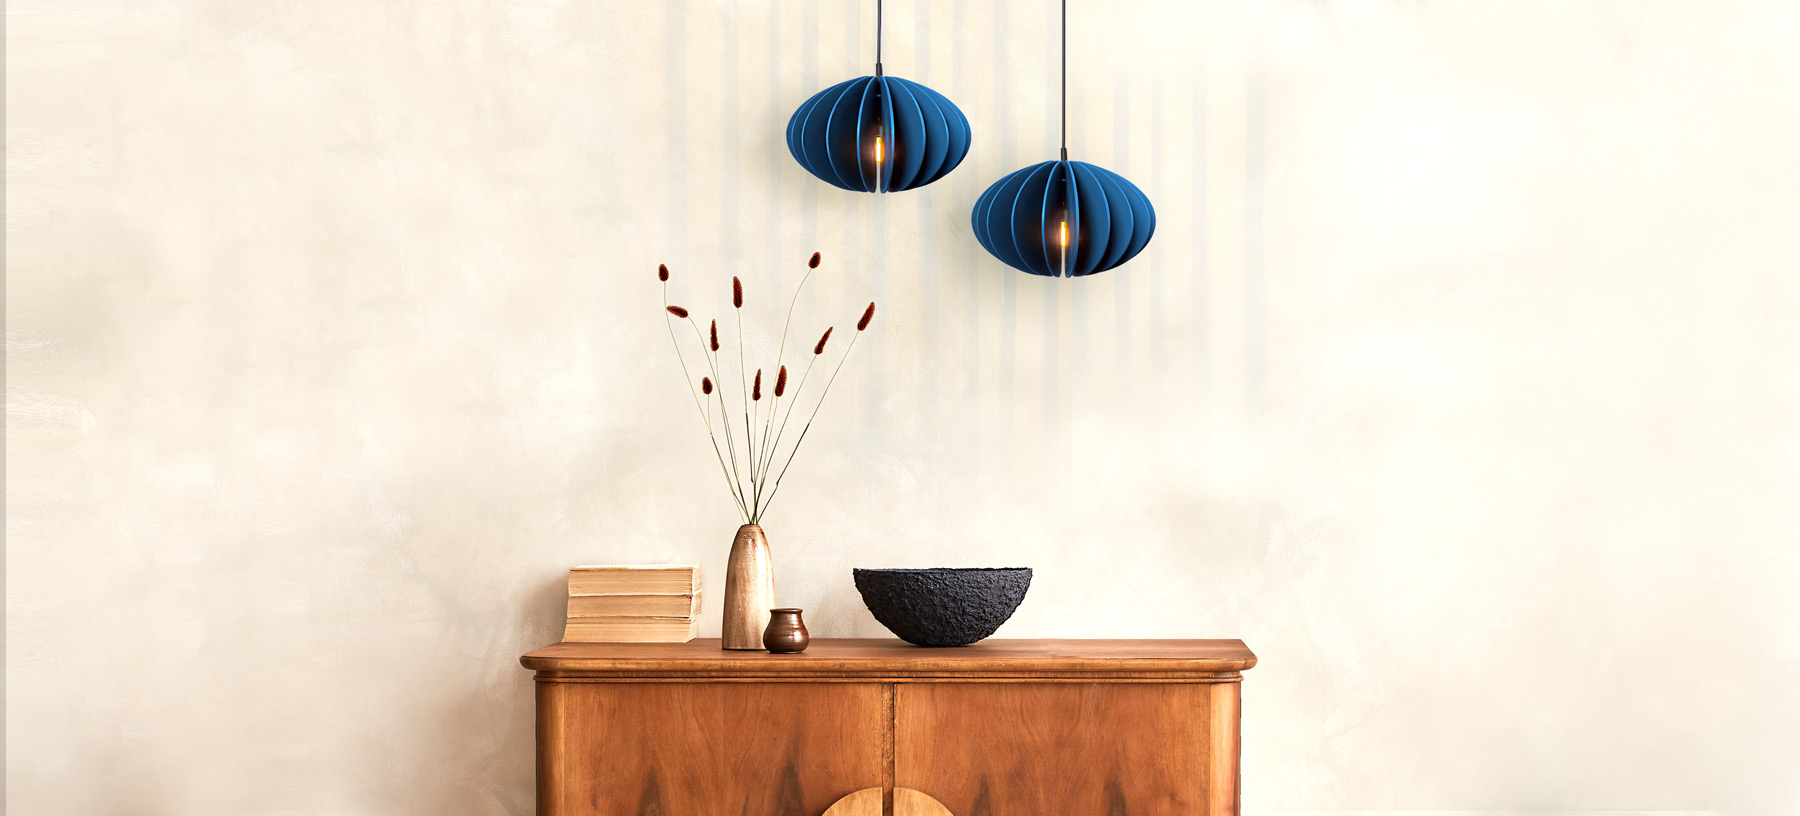 Modern cozy lighting, two pendants lights create the desired warm interior atmosphere